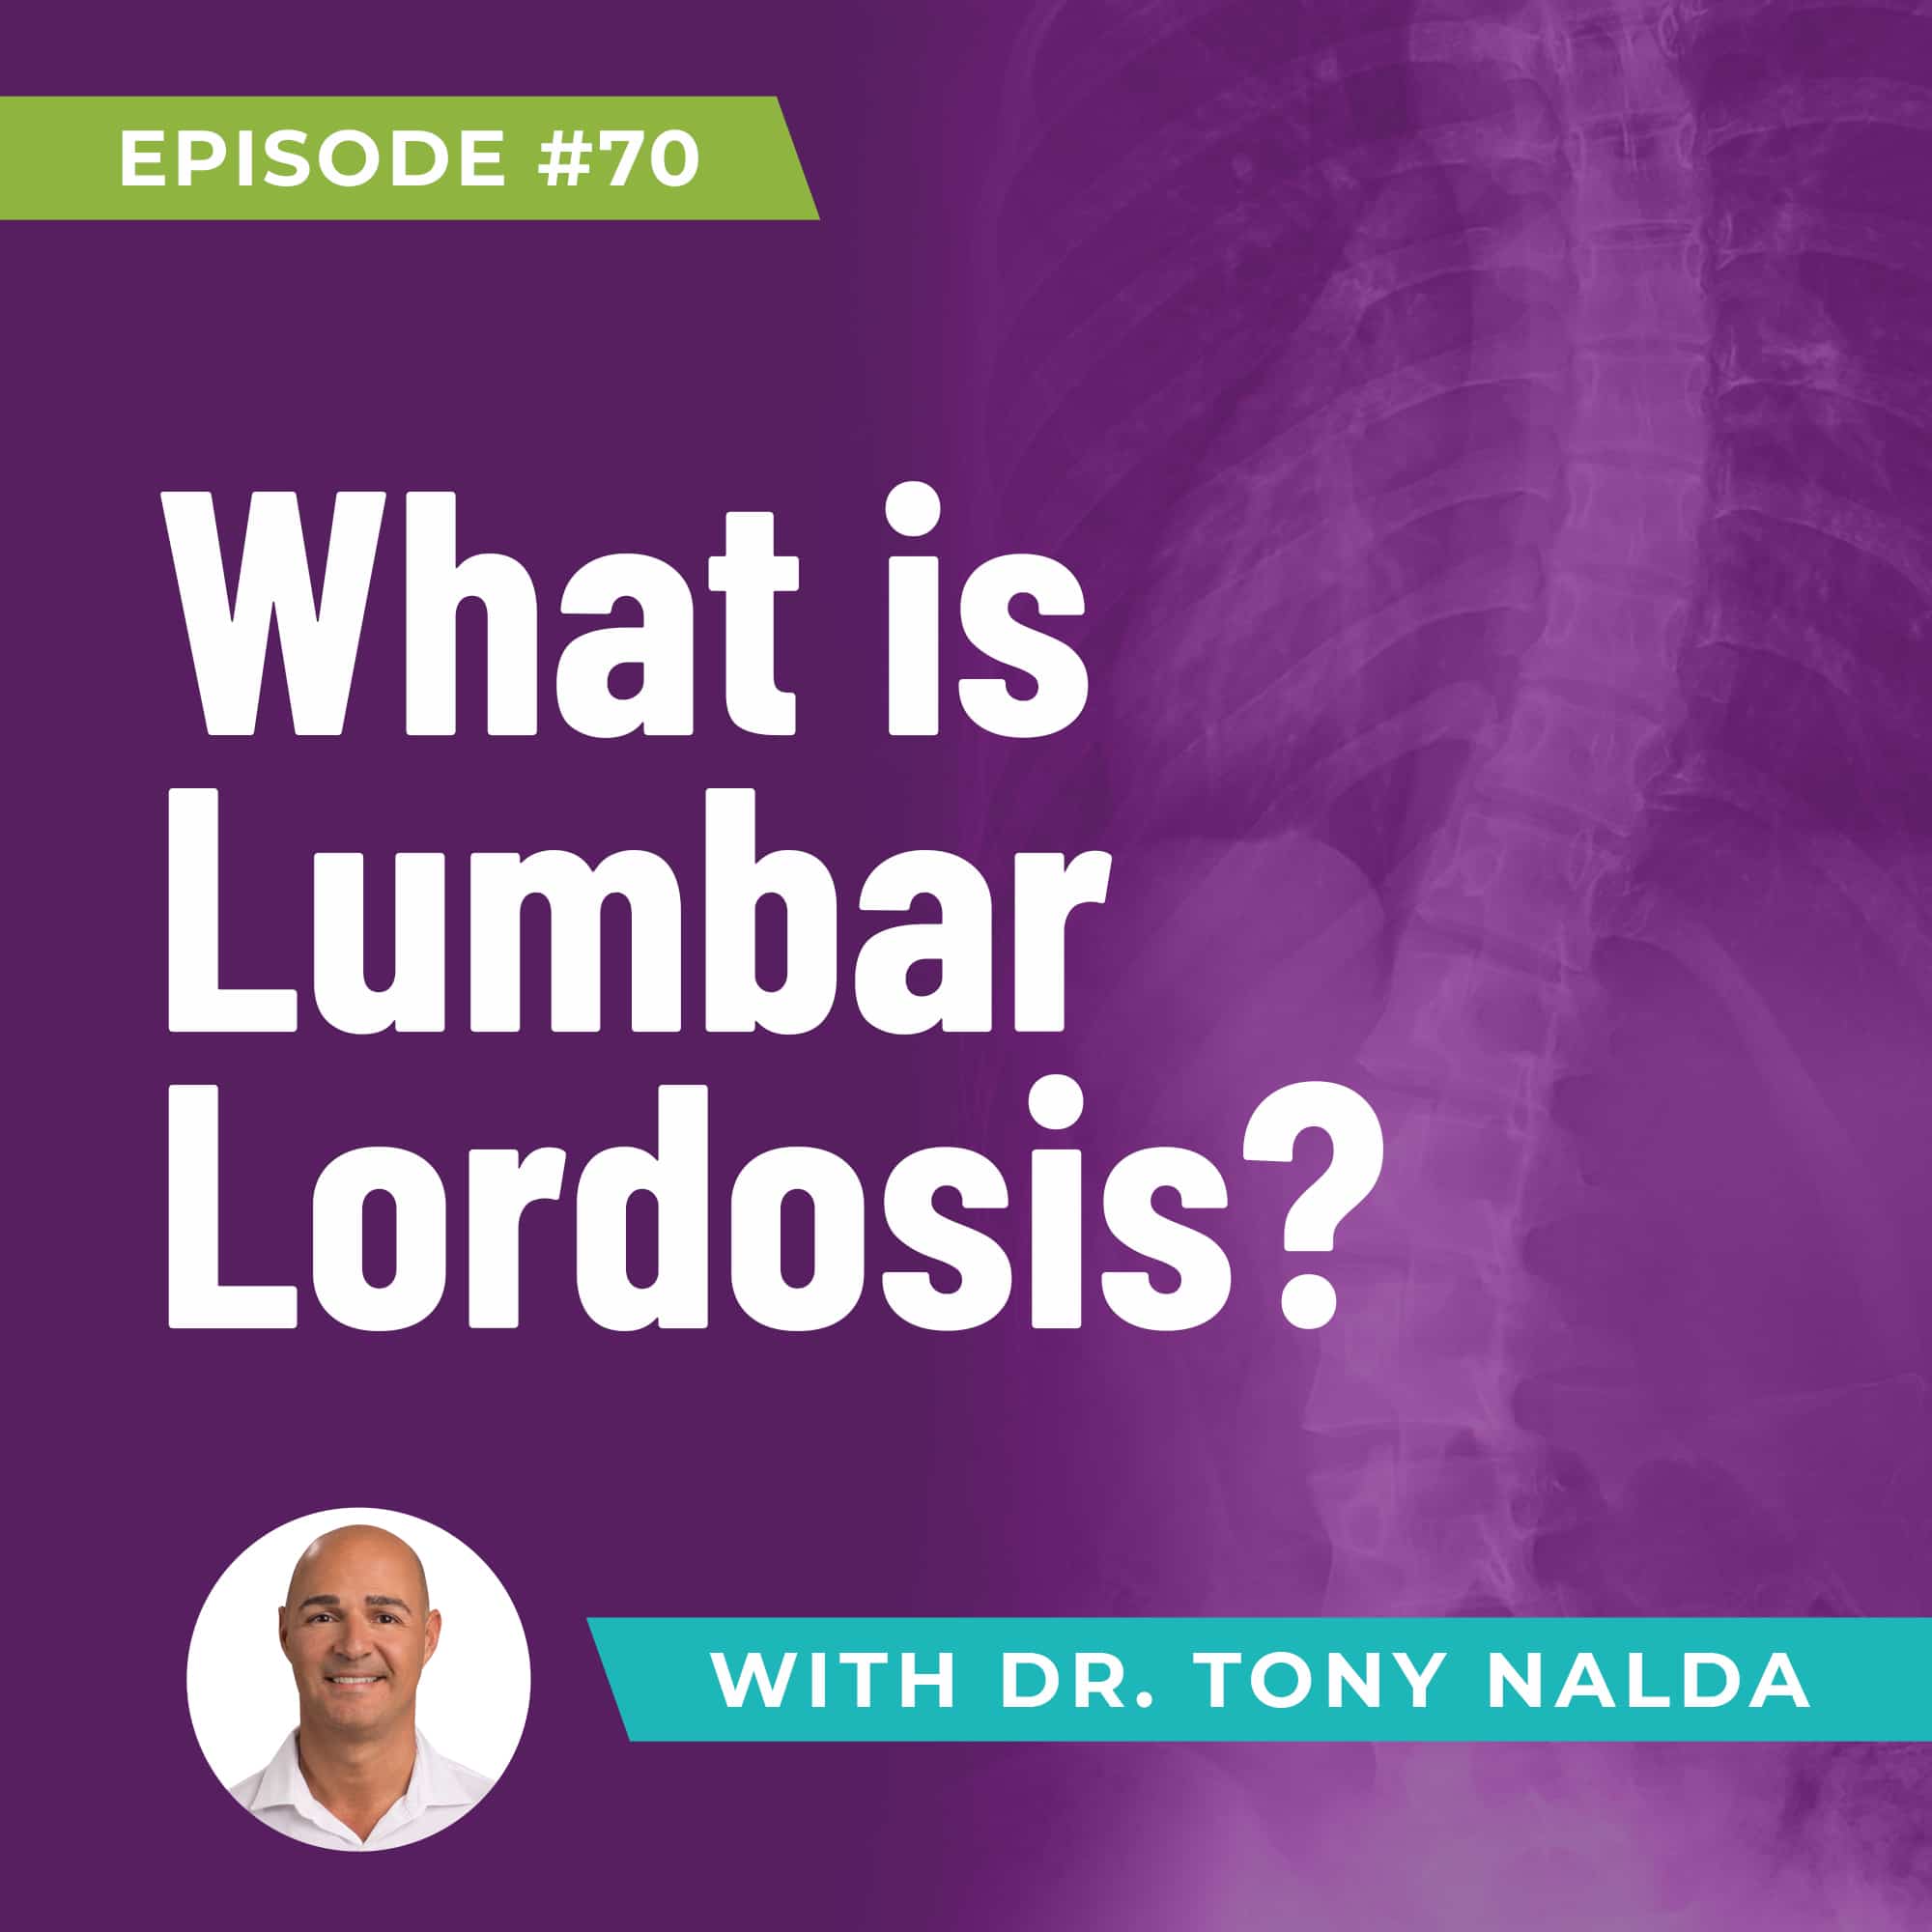 What is Lumbar Lordosis?